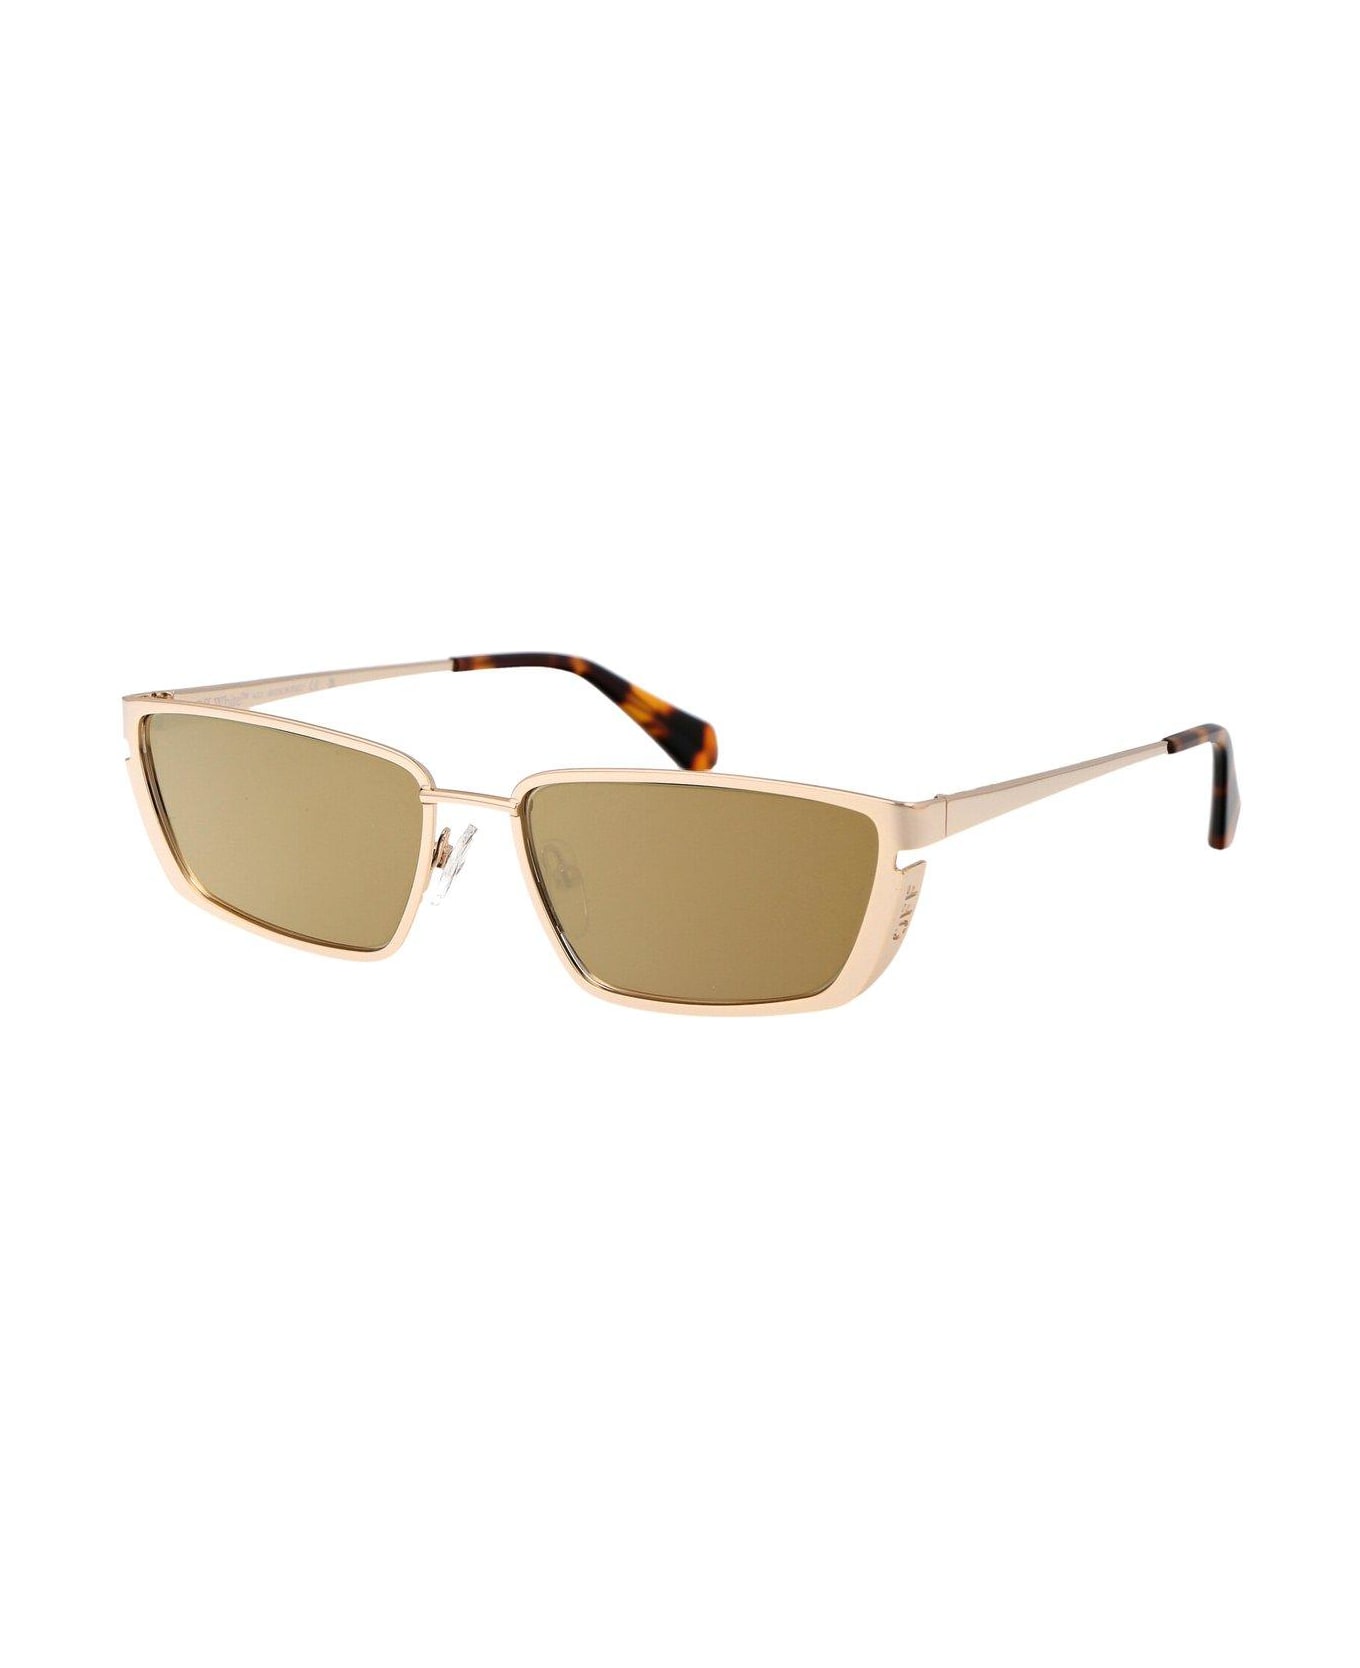 Off-White Richfield Sunglasses - 7676 GOLD GOLD サングラス